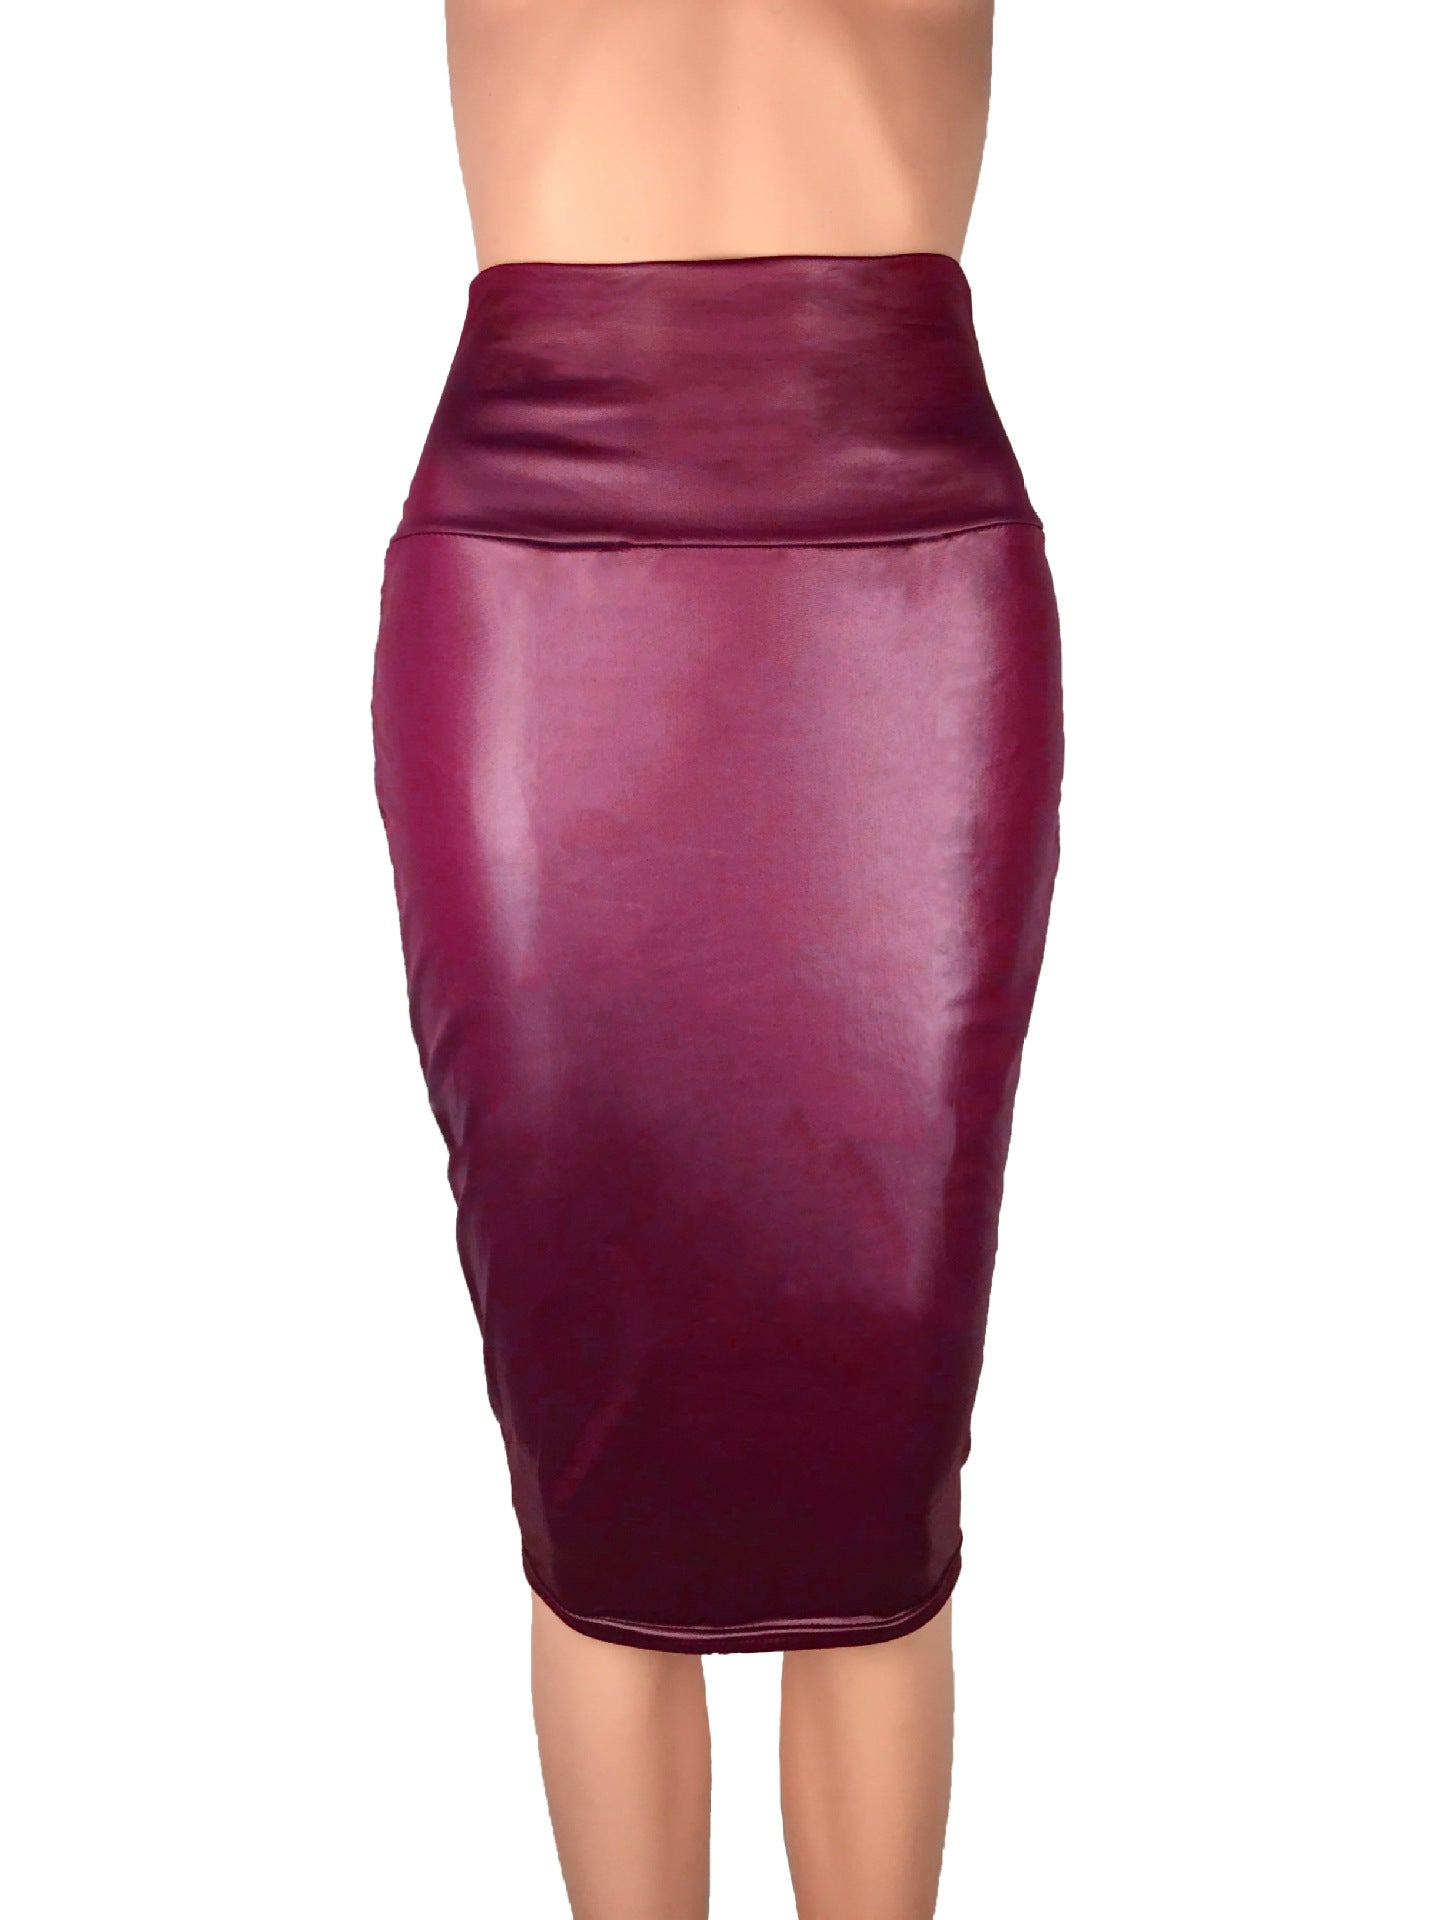 High Waist Vegan Leather Pencil Skirt (Plus size available)